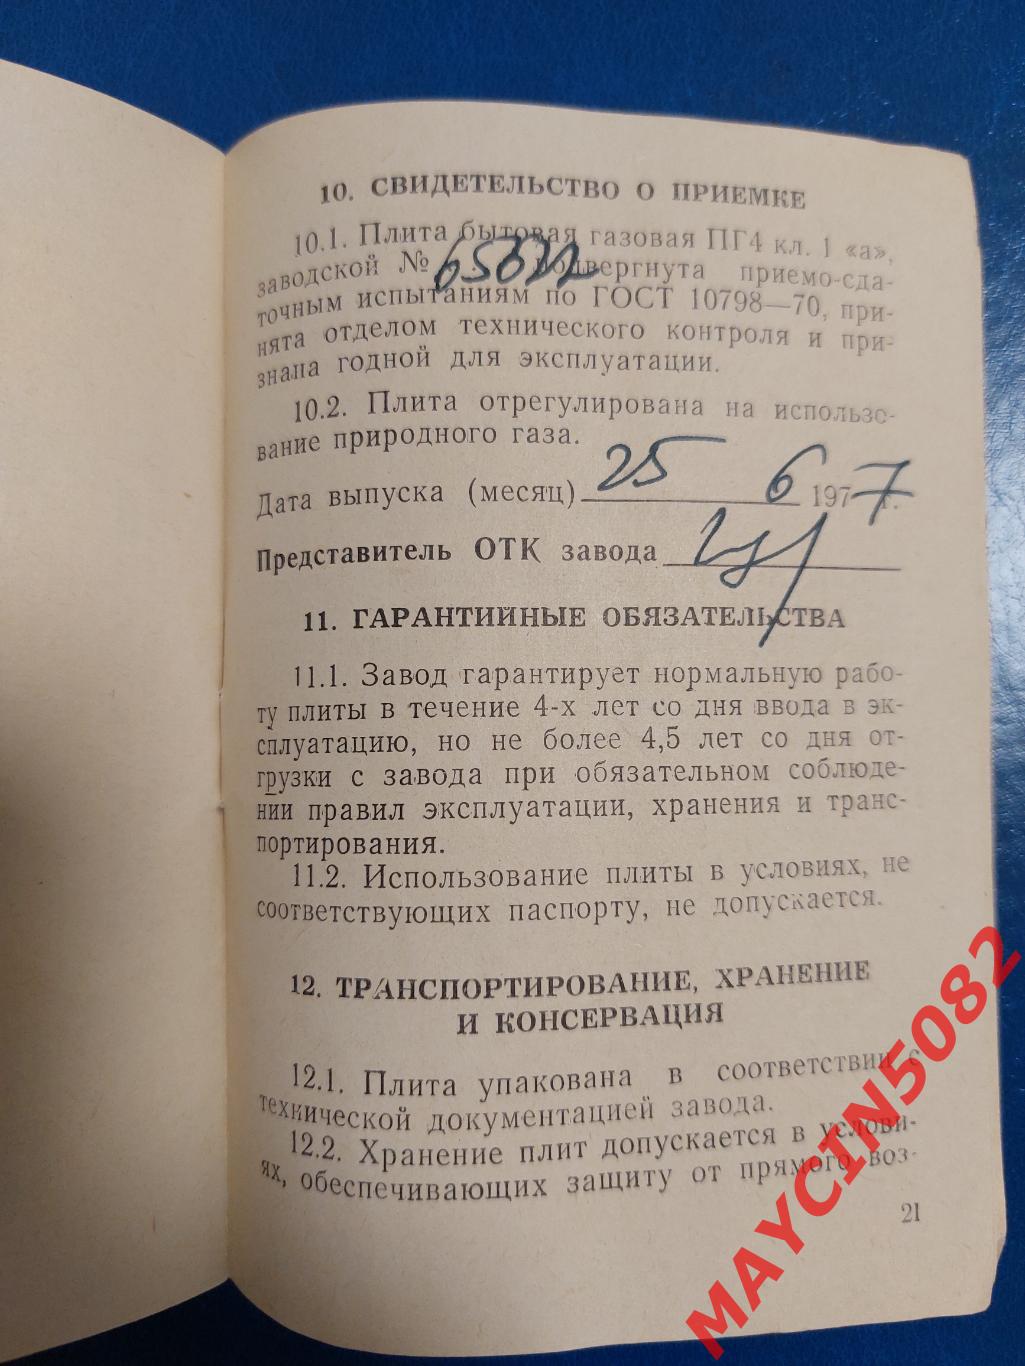 Паспорт. Плита бытовая газовая. 1977 год. Москва. 1